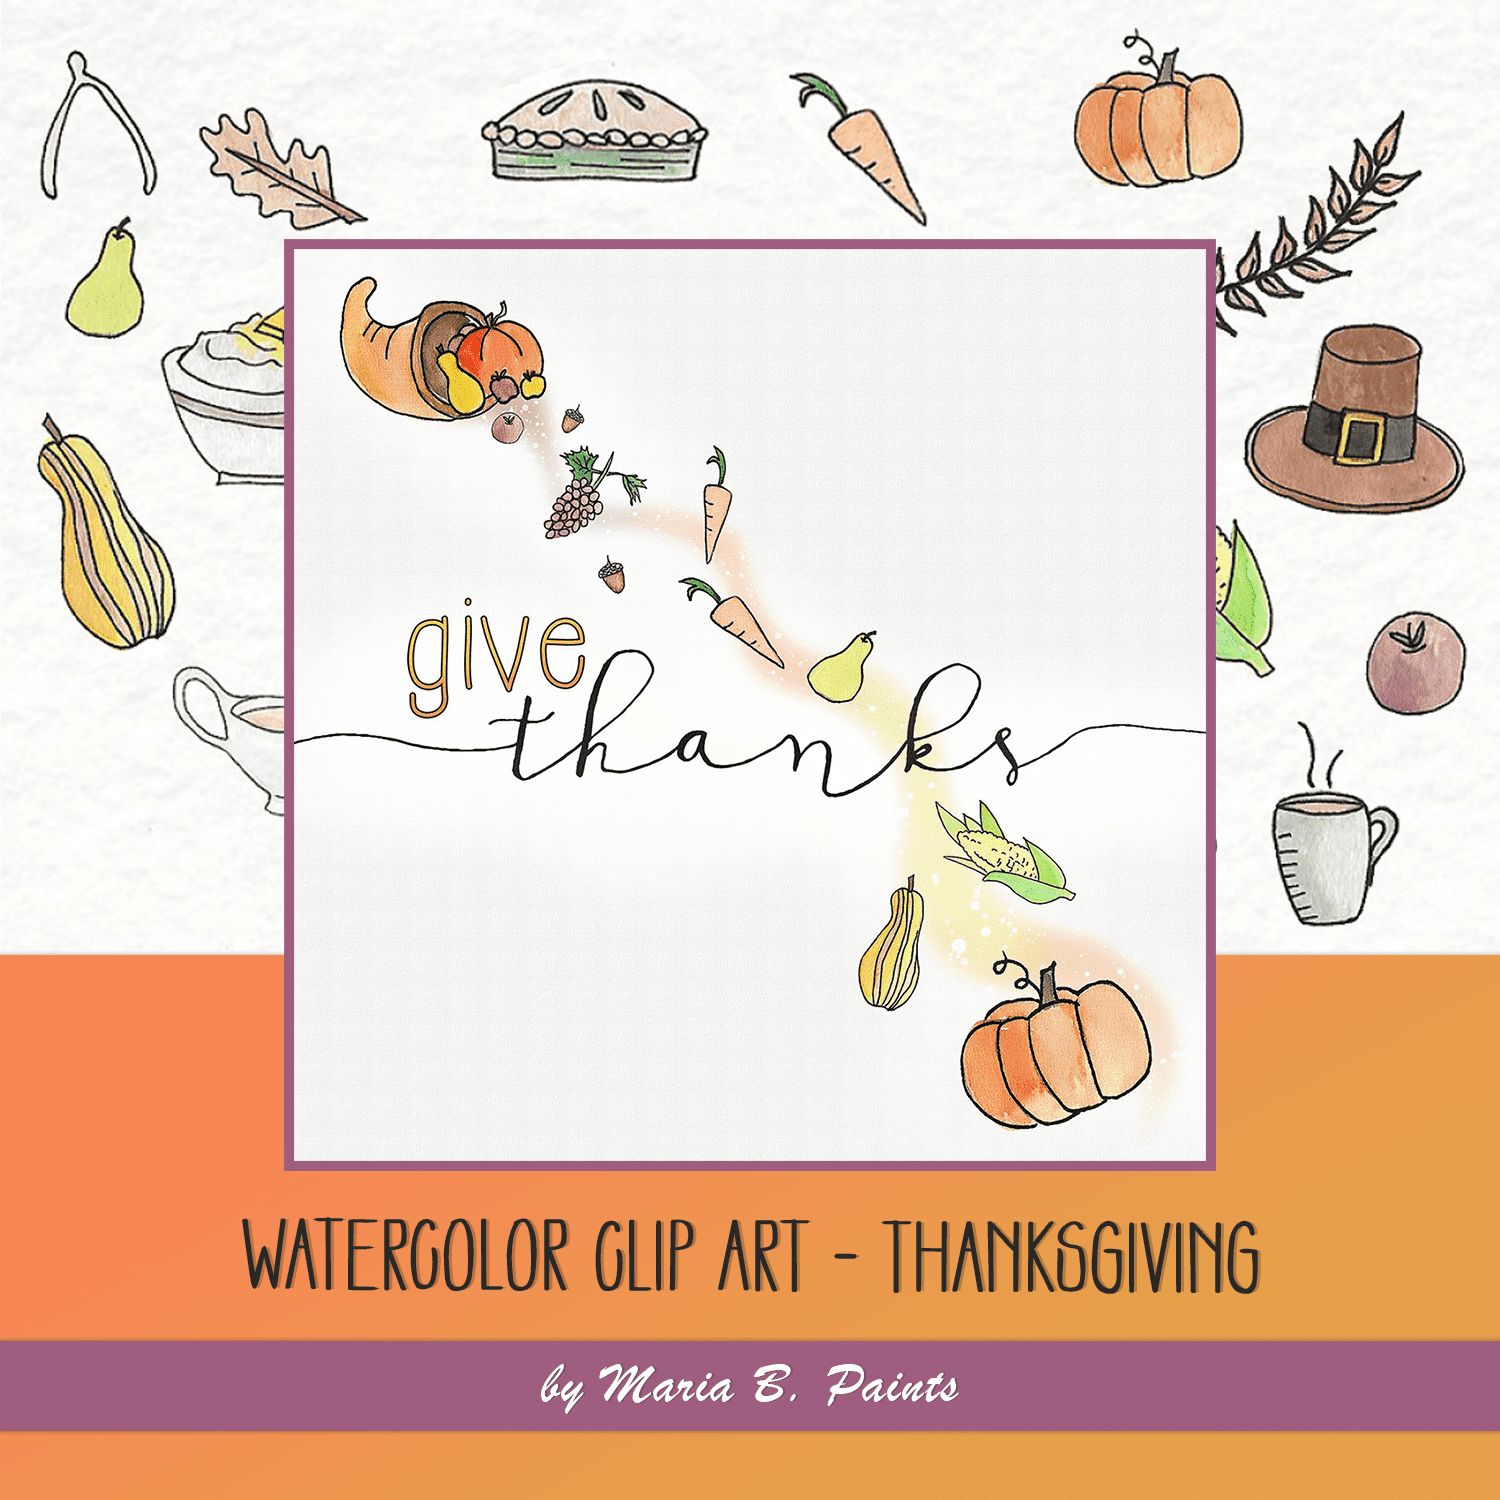 Watercolor Clip Art - Thanksgiving.